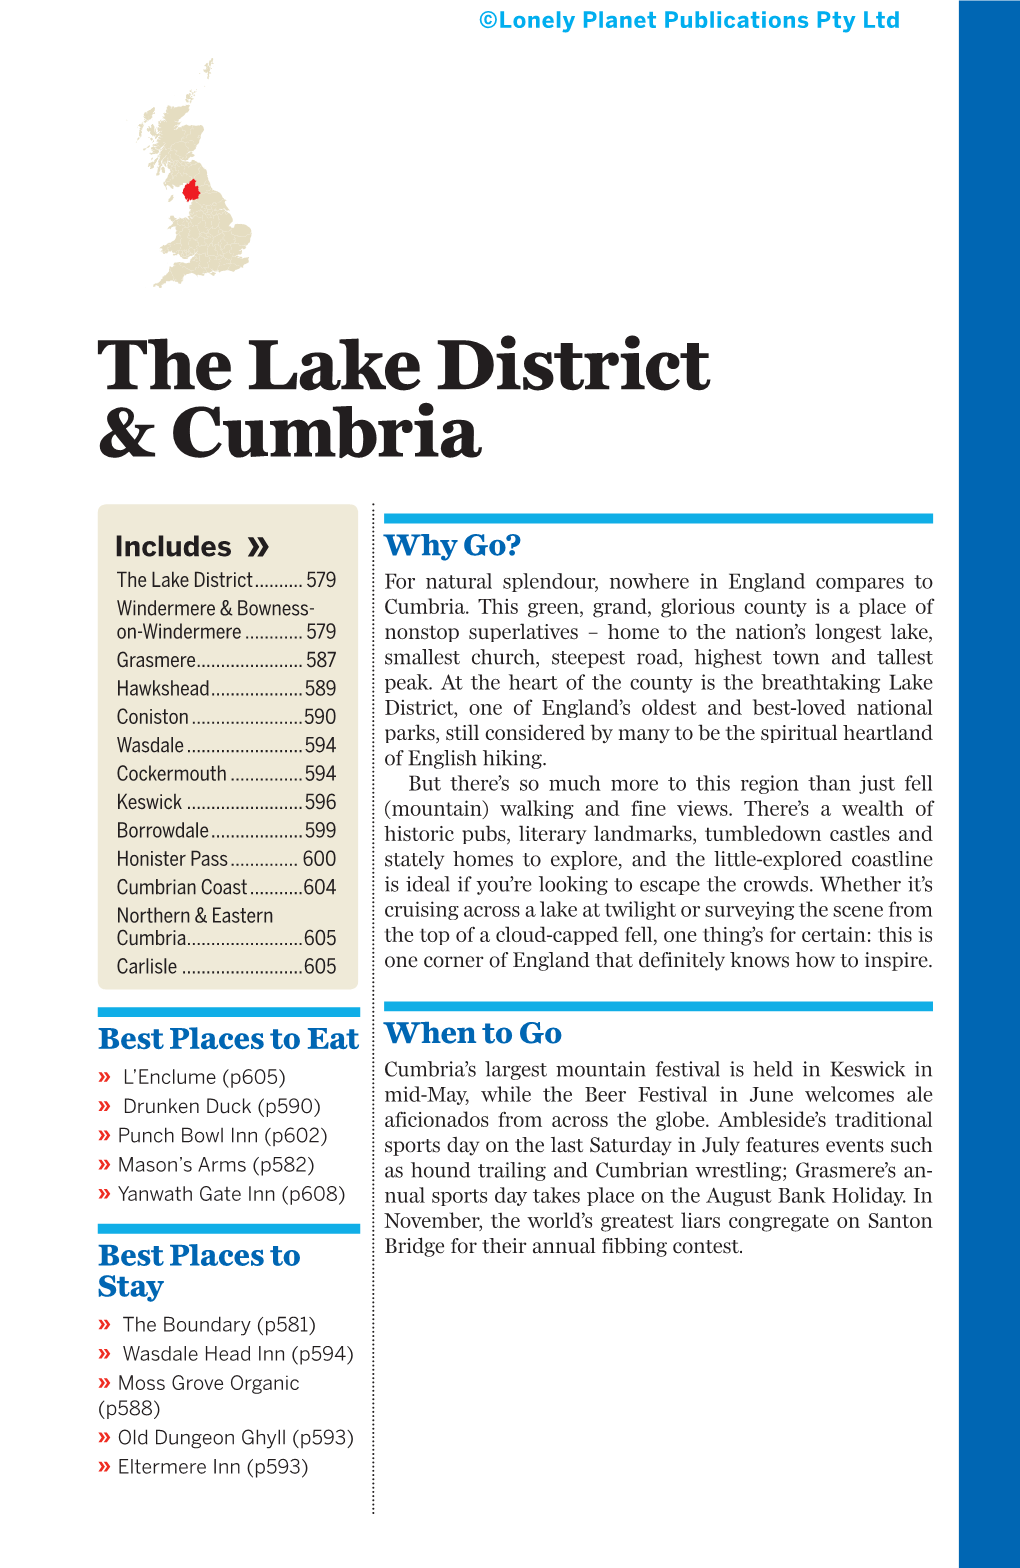 The Lake District & Cumbria